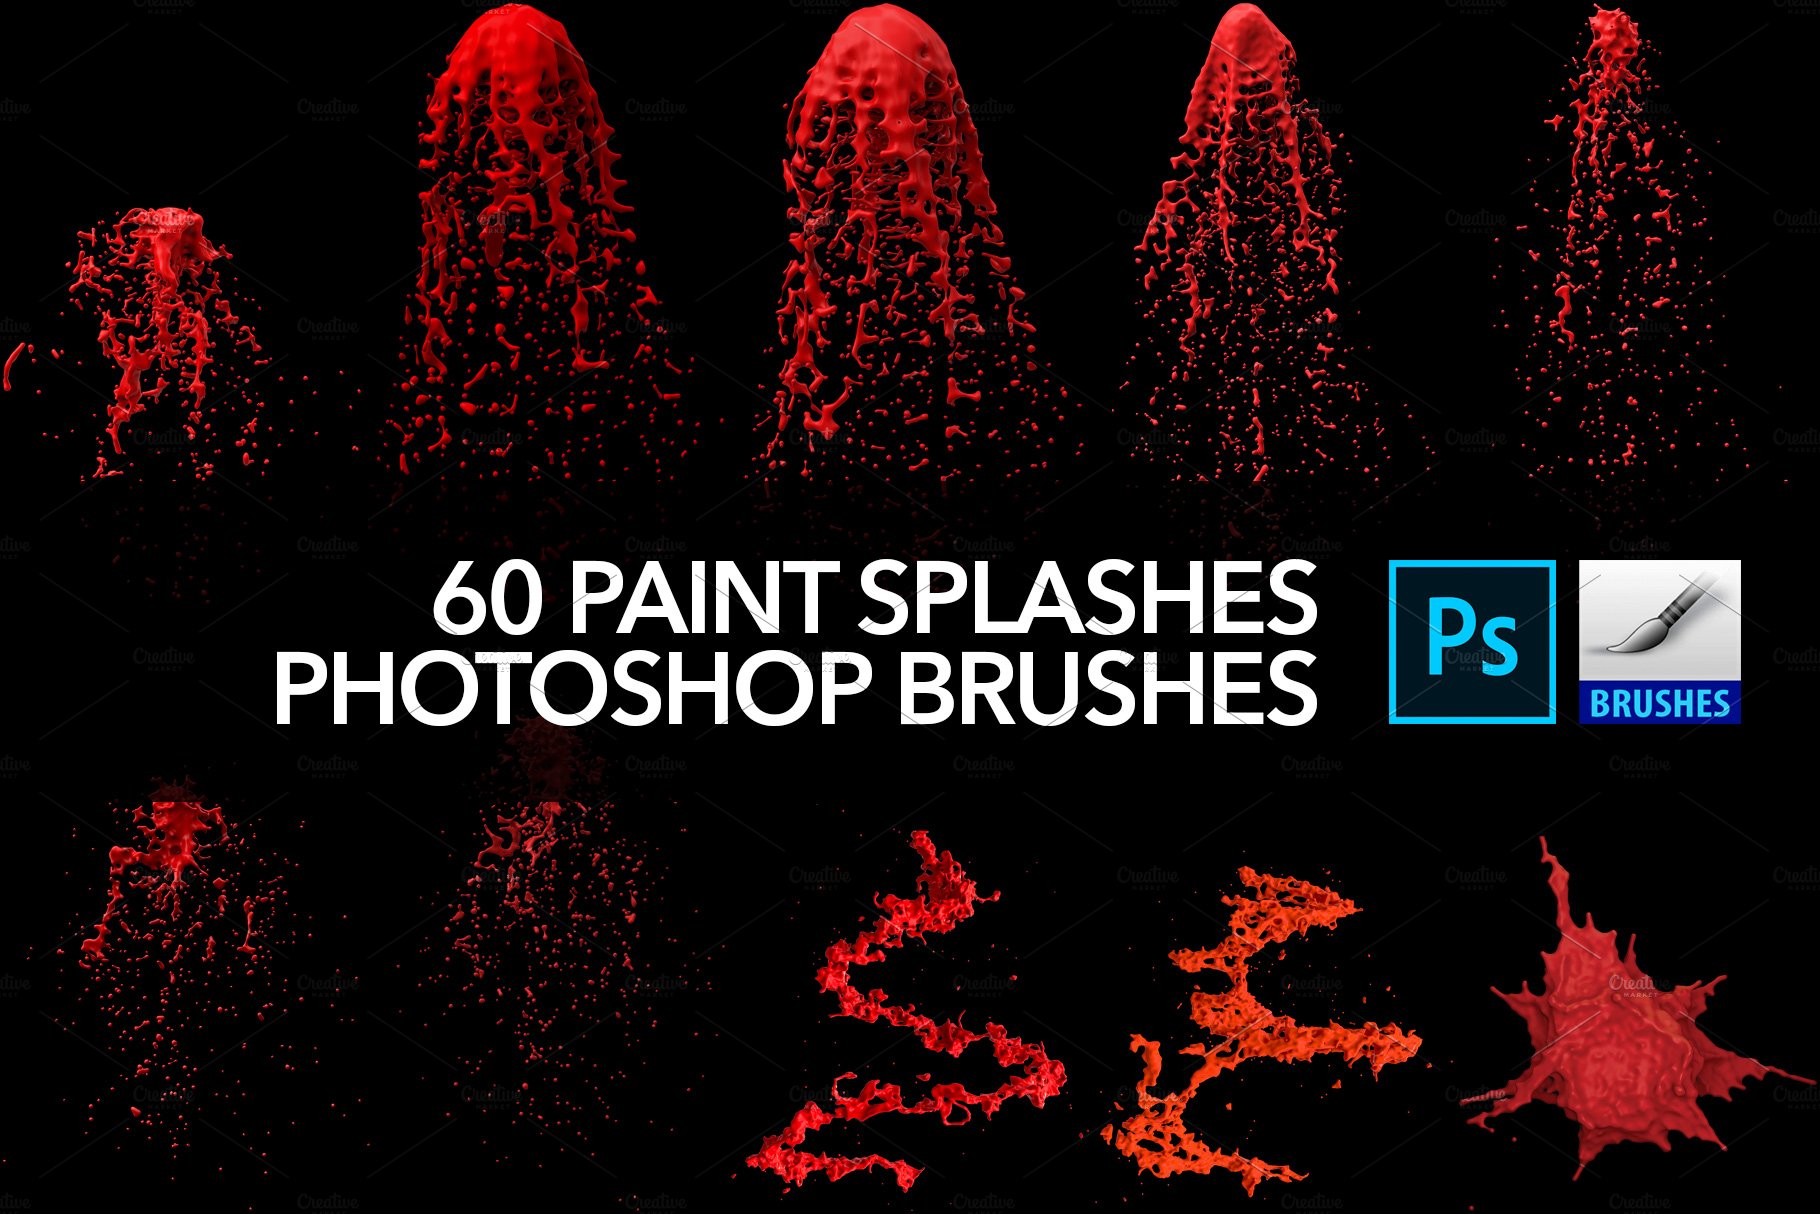 60 paint splash photoshop brushes preview 07a 647